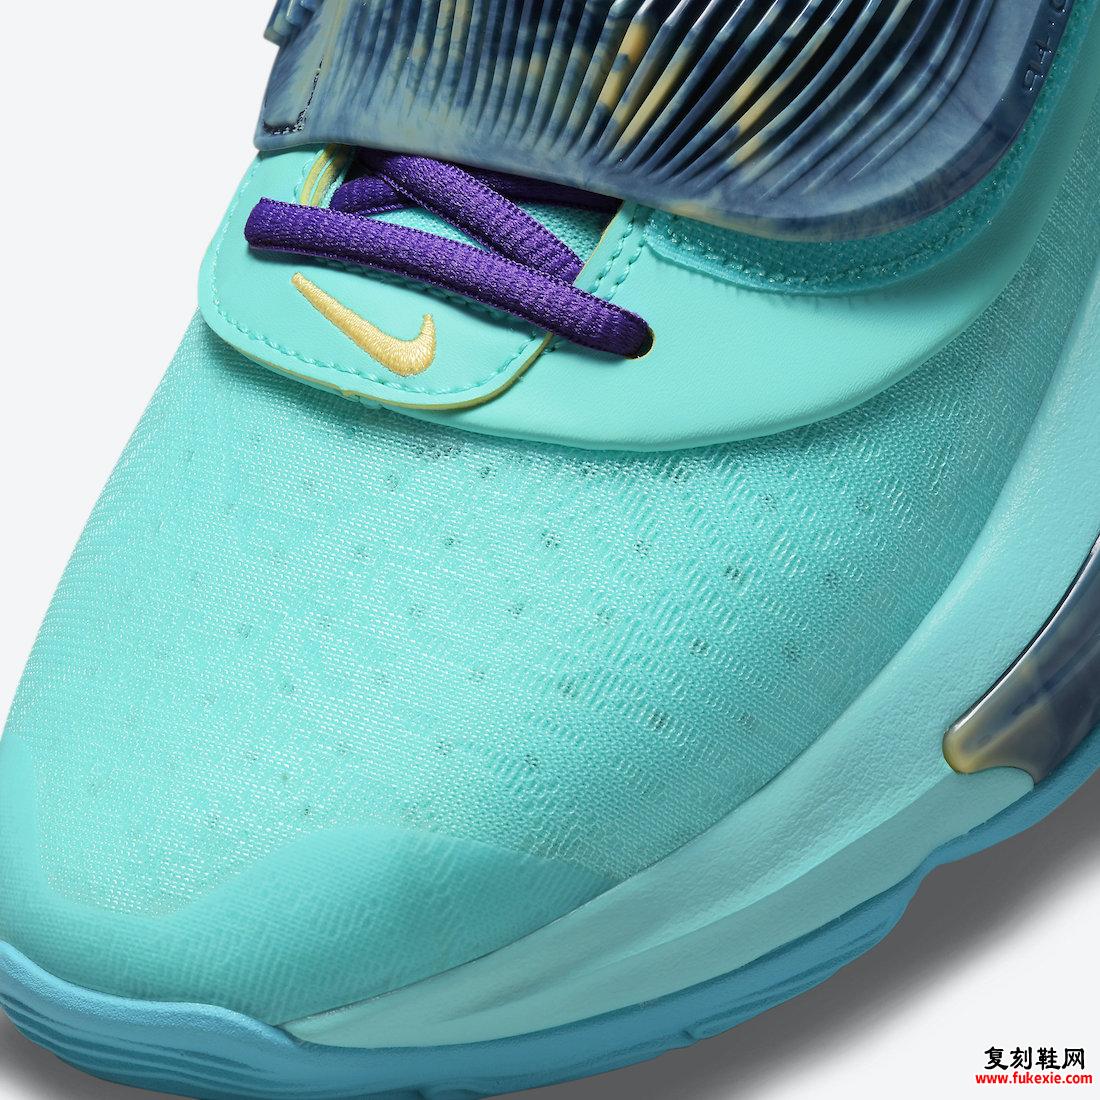 Nike Zoom Freak 3 Aqua DA0695-400 发布日期信息